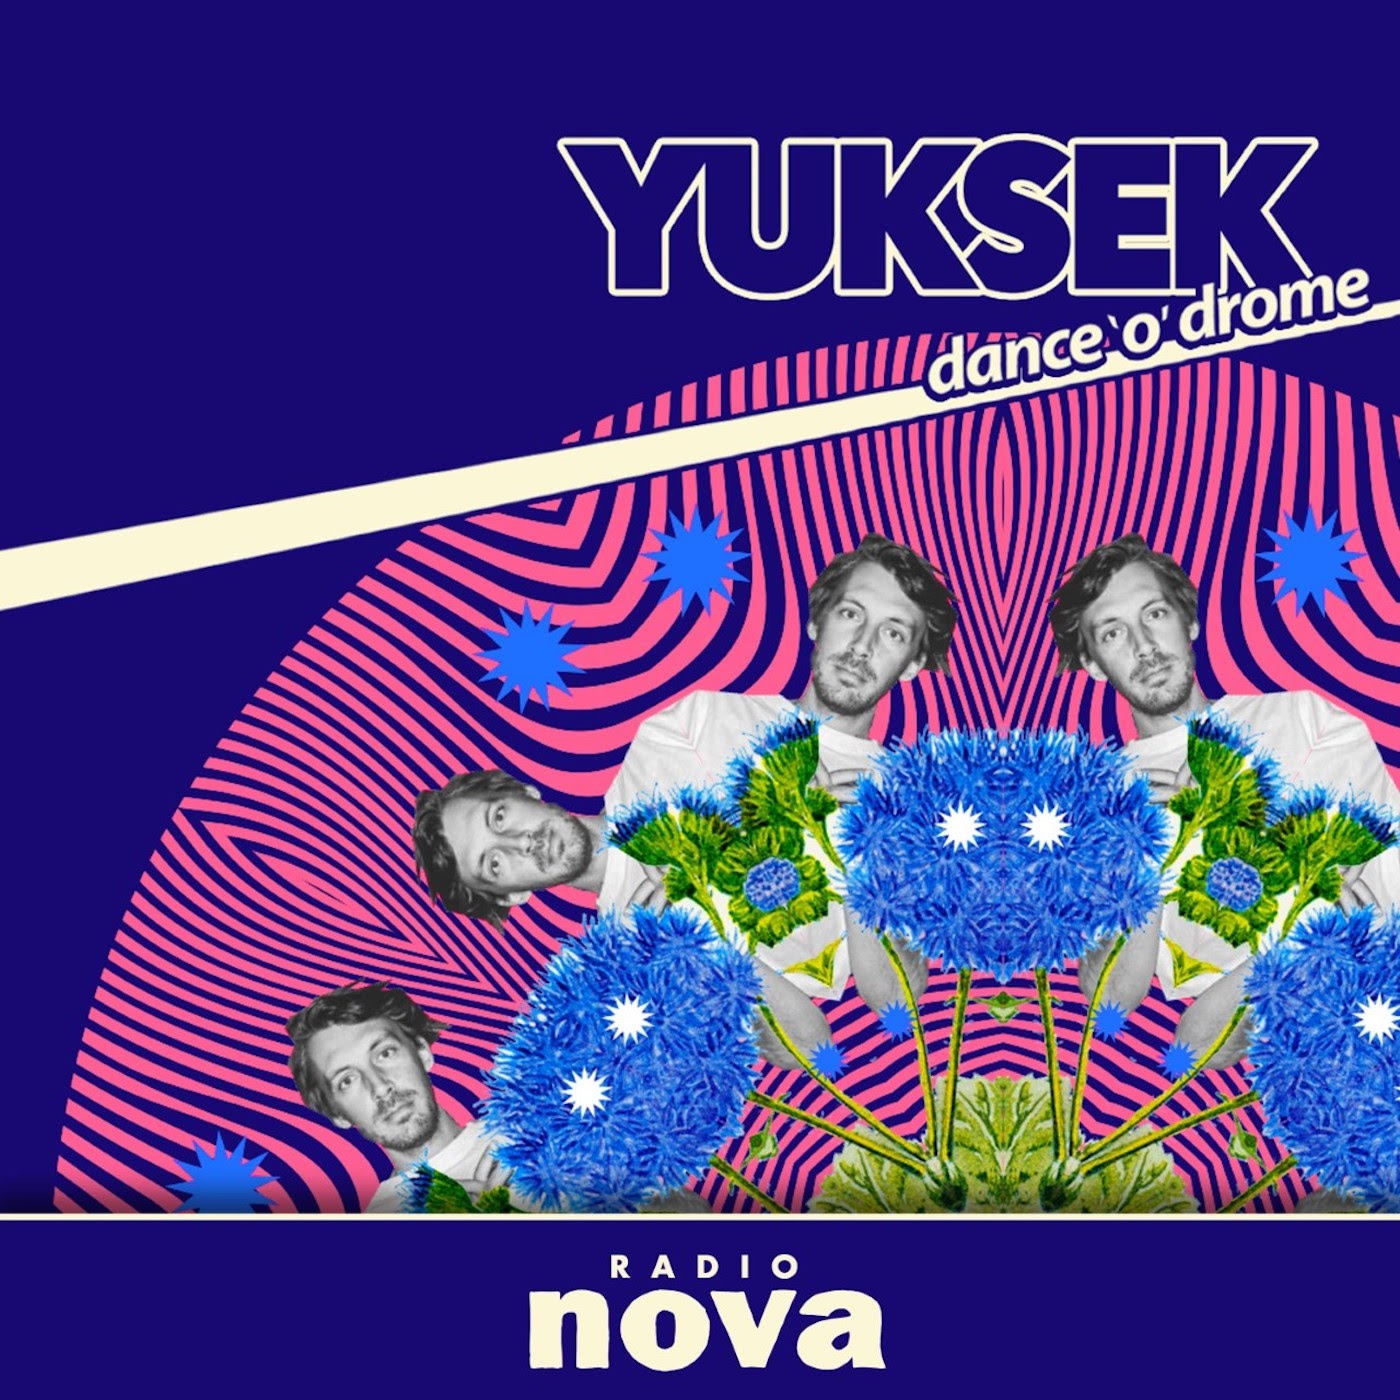 « Dance’o’drome » #6 : le mix de Yuksek, avec Art of Tones, sur Radio Nova